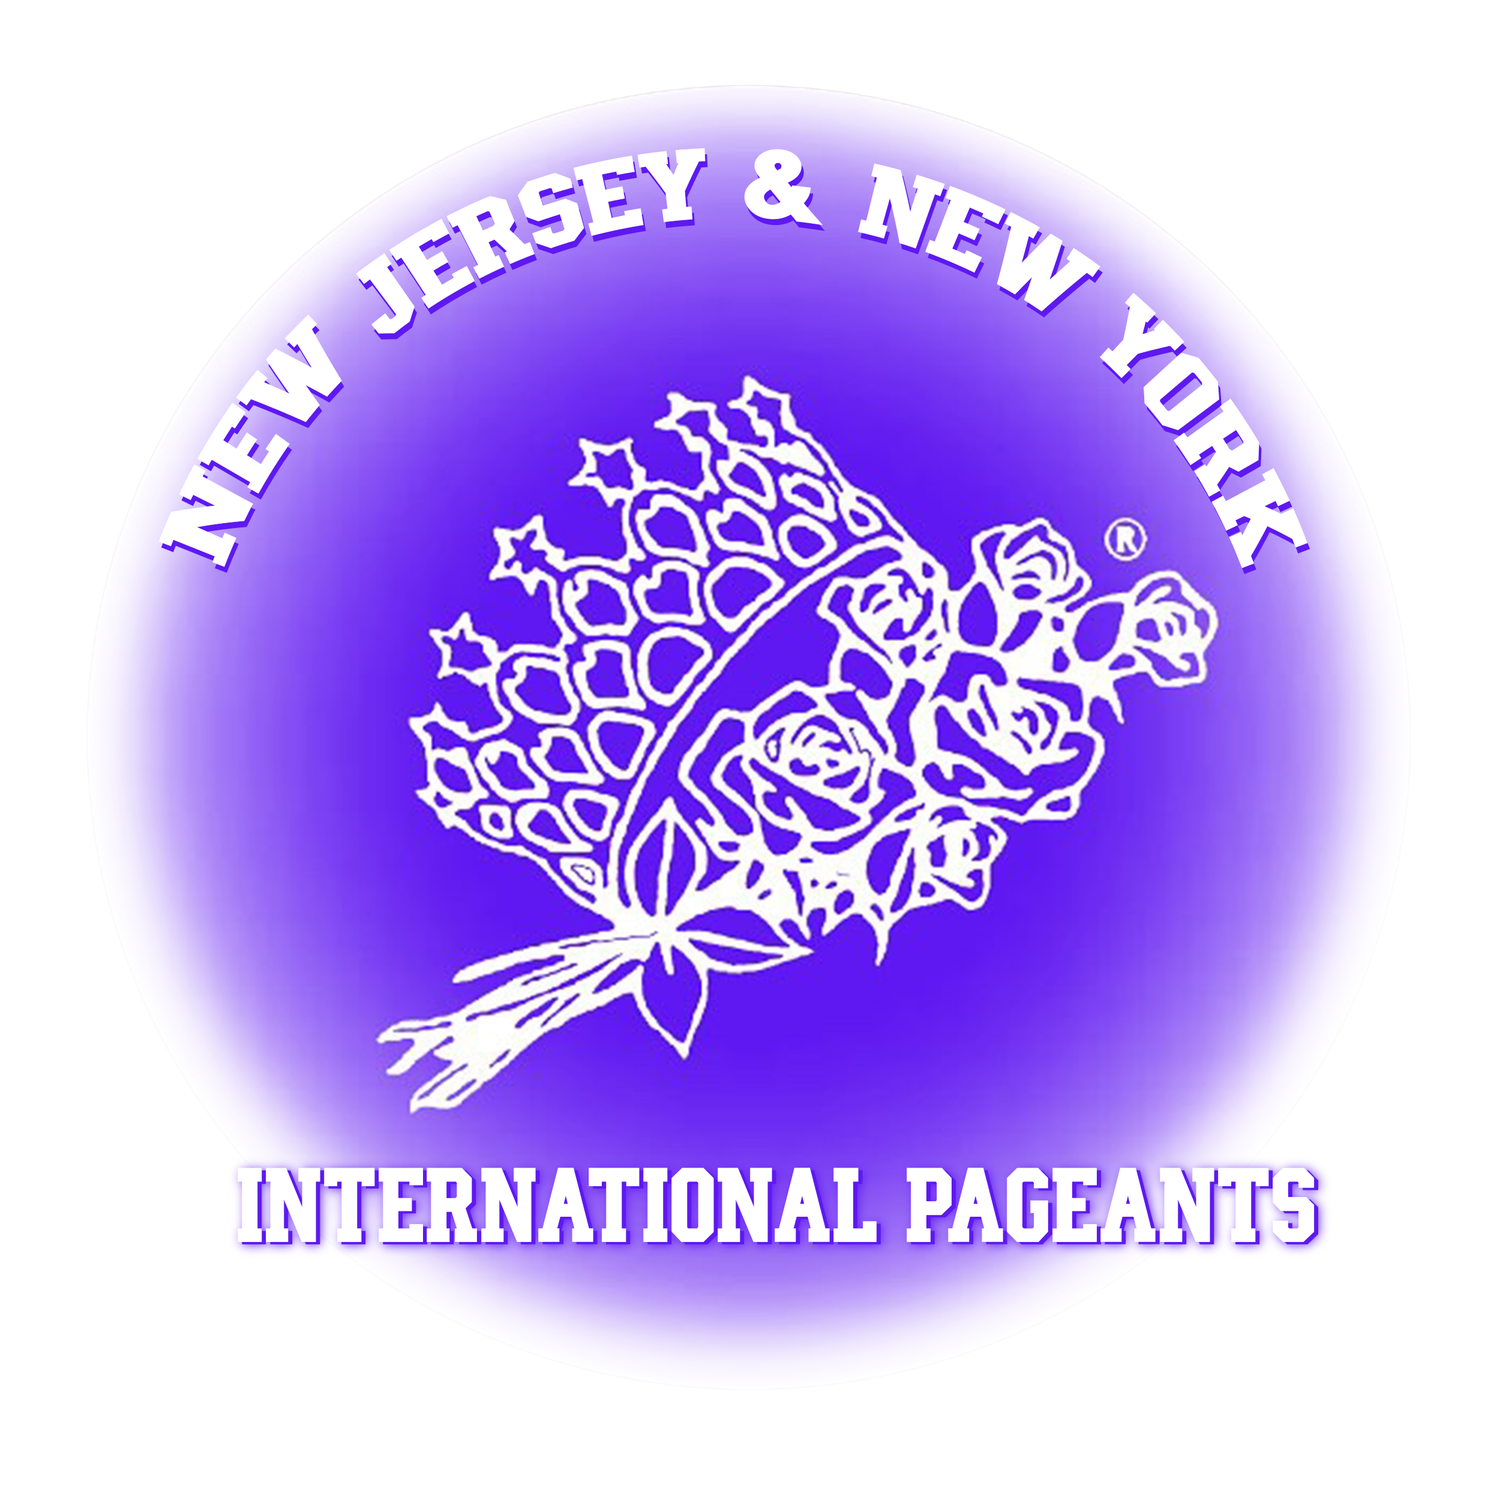 New Jersey & New York International Pageants